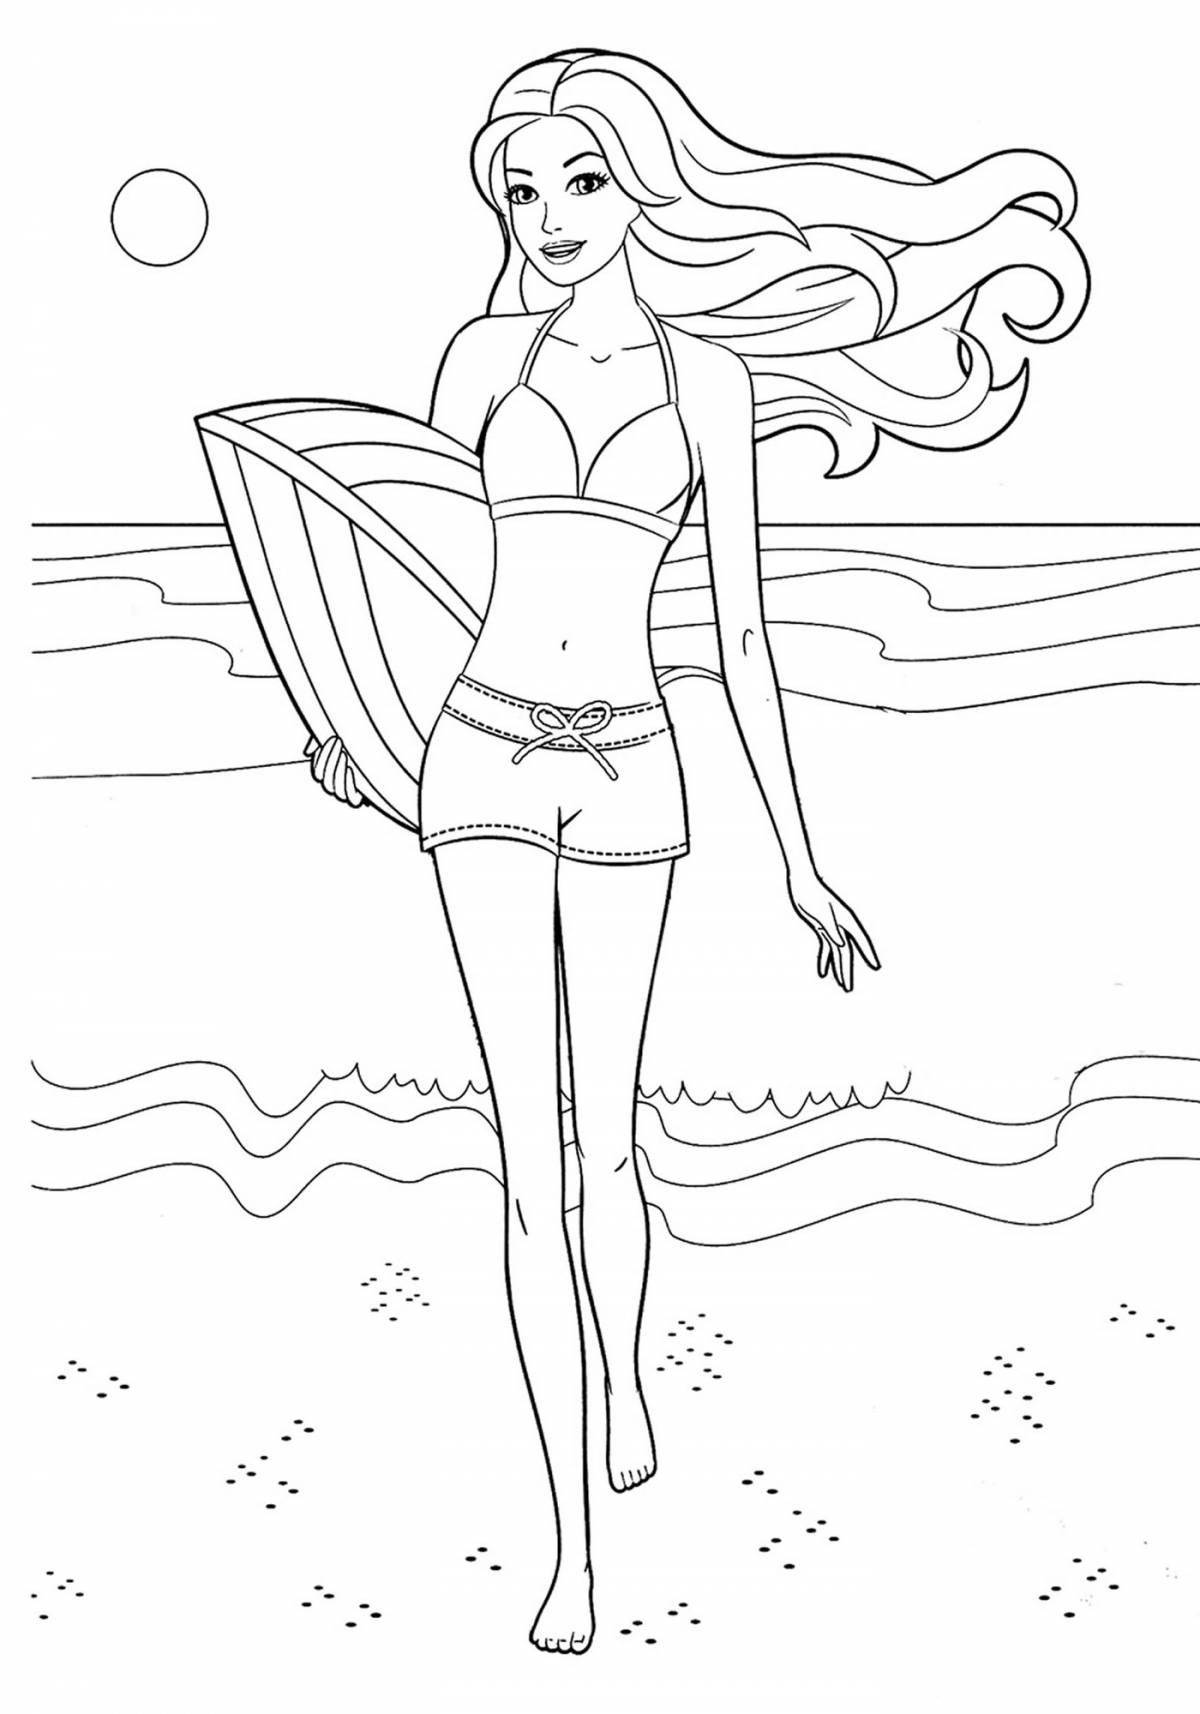 Energetic coloring girl in a bathing suit